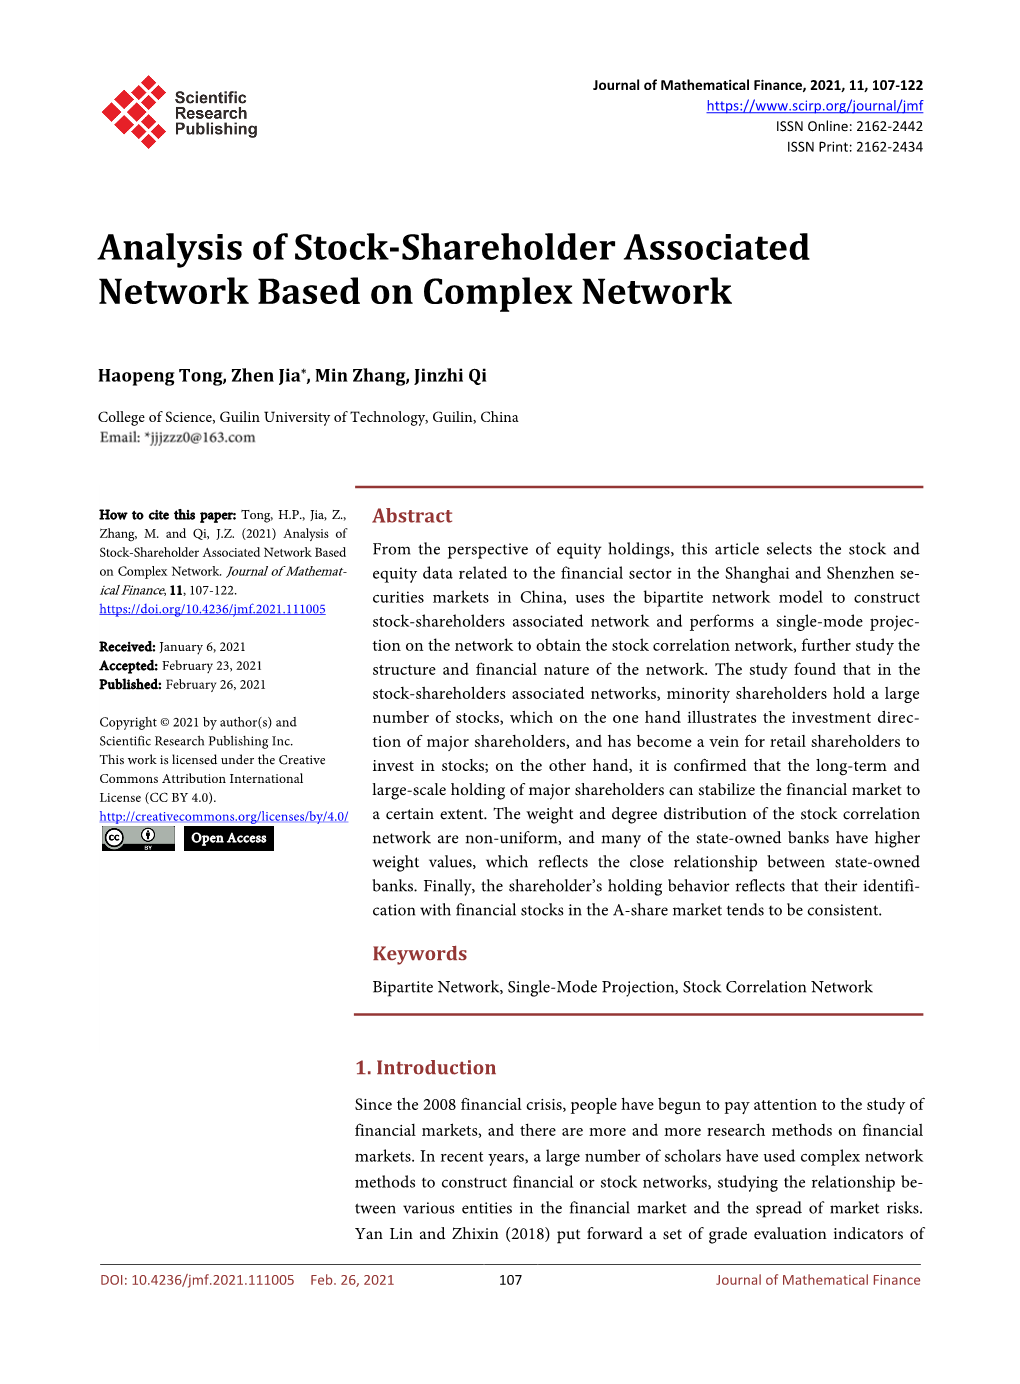 Analysis of Stock-Shareholder Associated Network Based on Complex Network